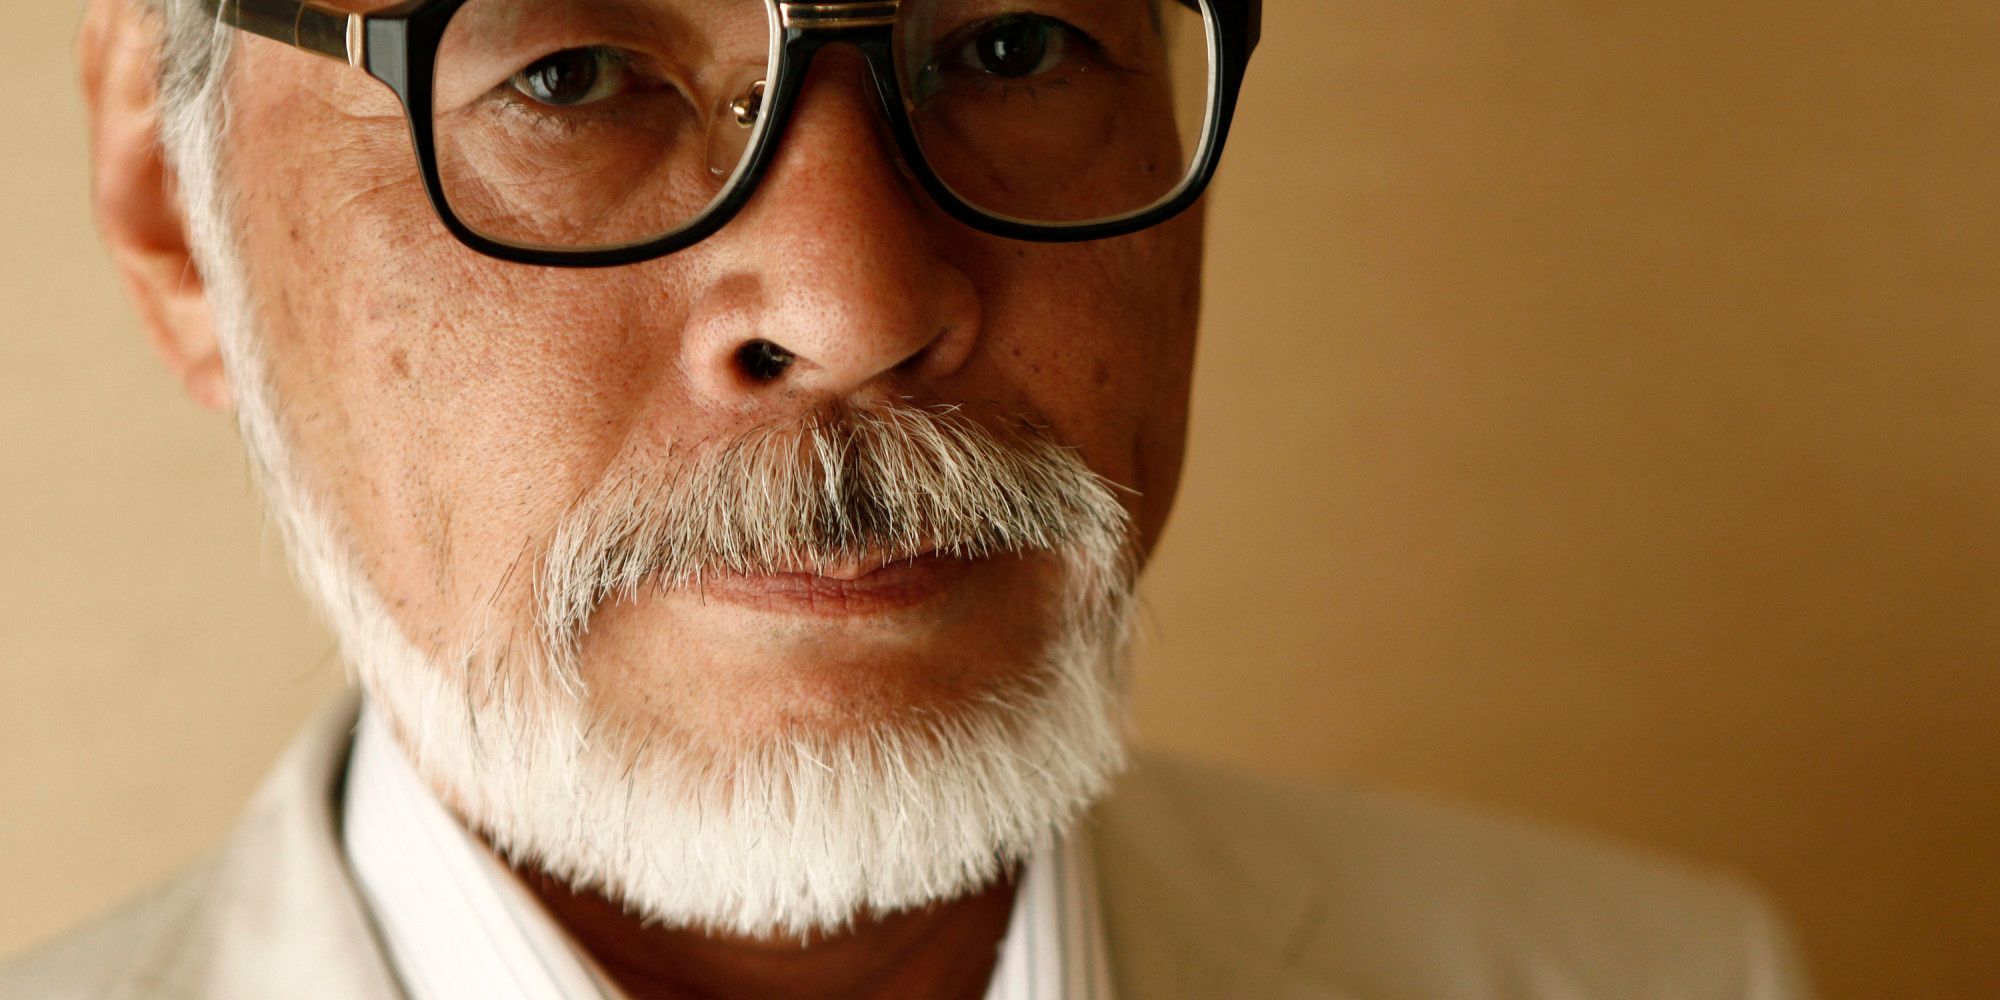 Hajao Mijazaki Zvedá se vítr Wind riser